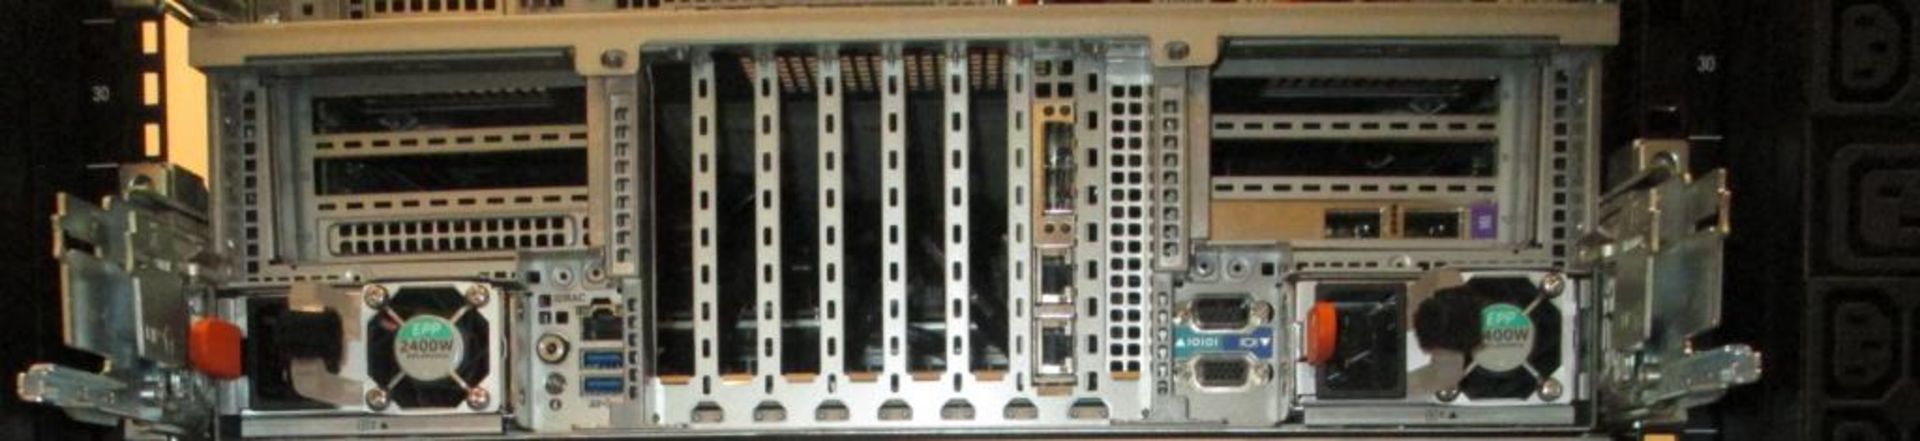 Dell Rack Server - Image 2 of 2